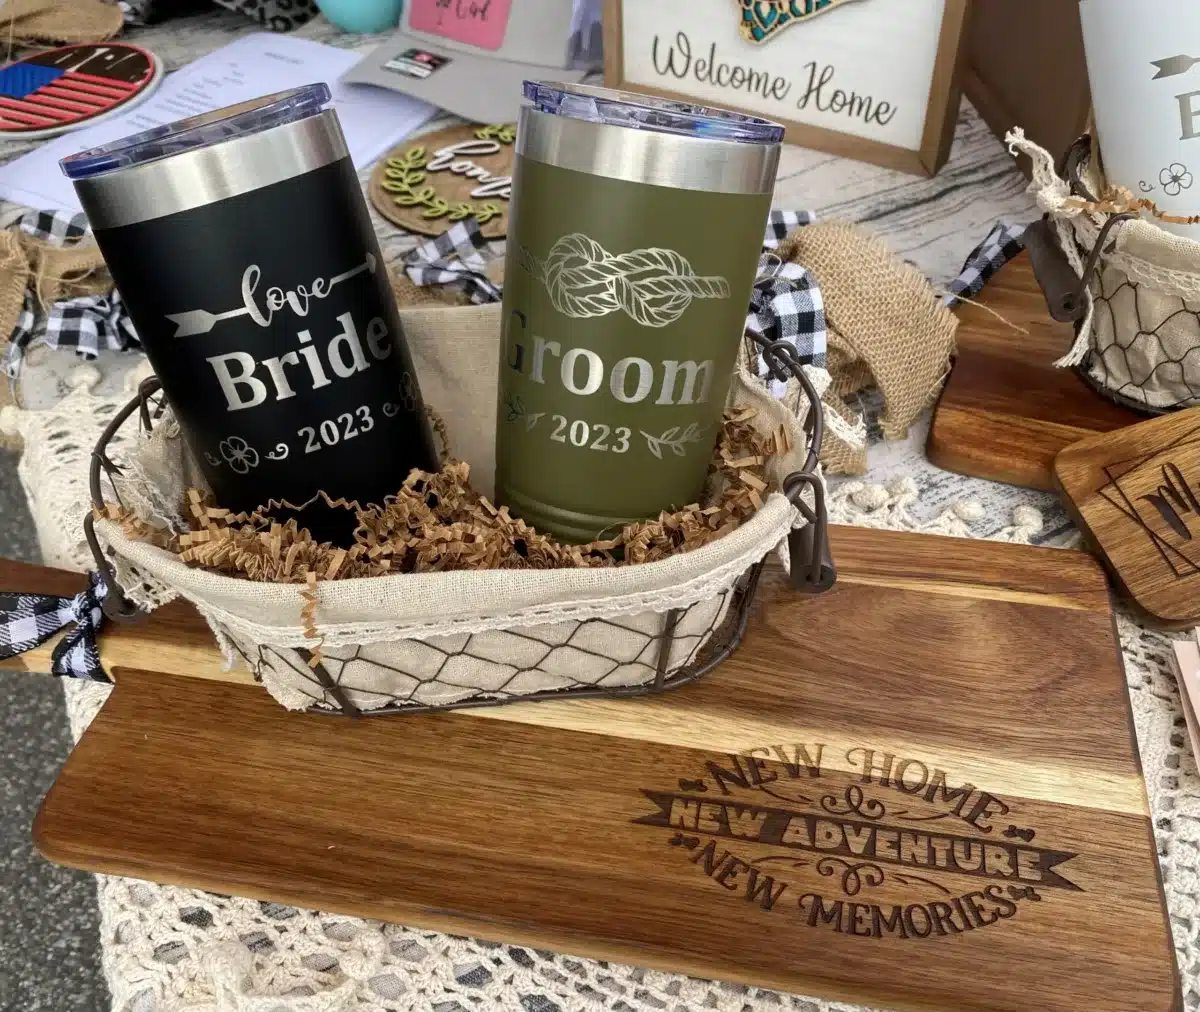 Custom Yeti Travel Mug Gift Box